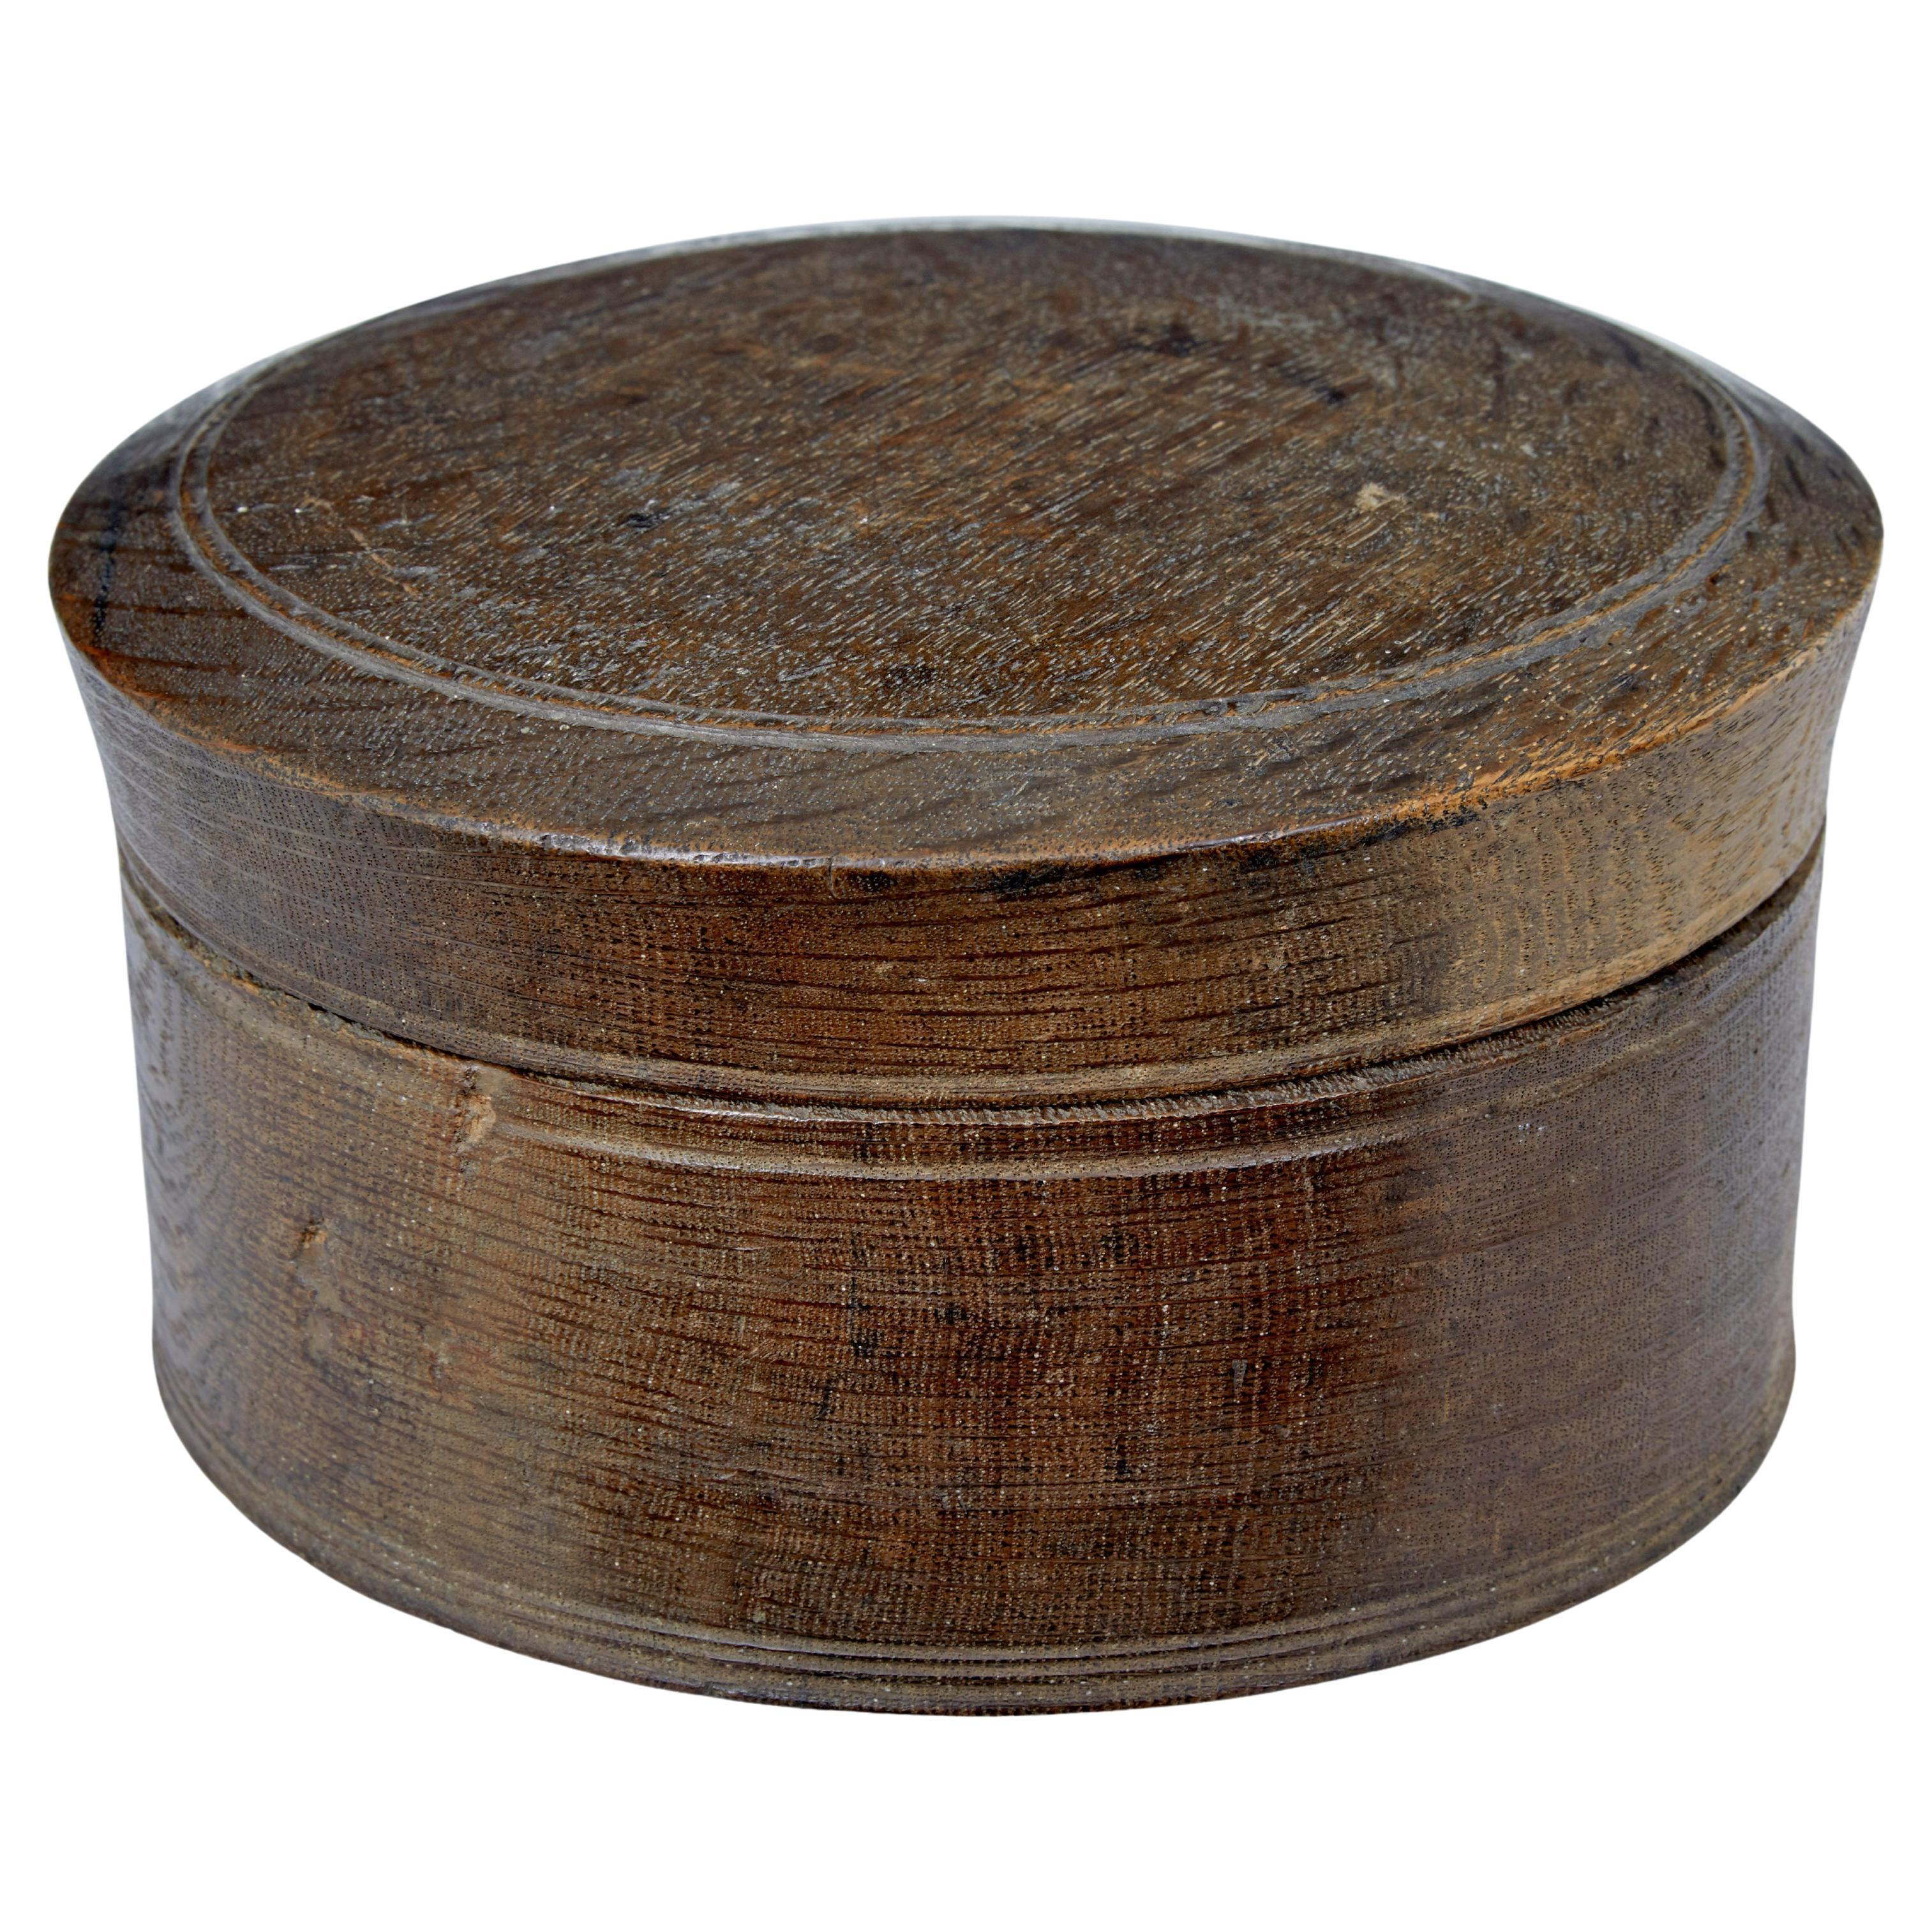 Early 19th century Swedish carved oak lidded box